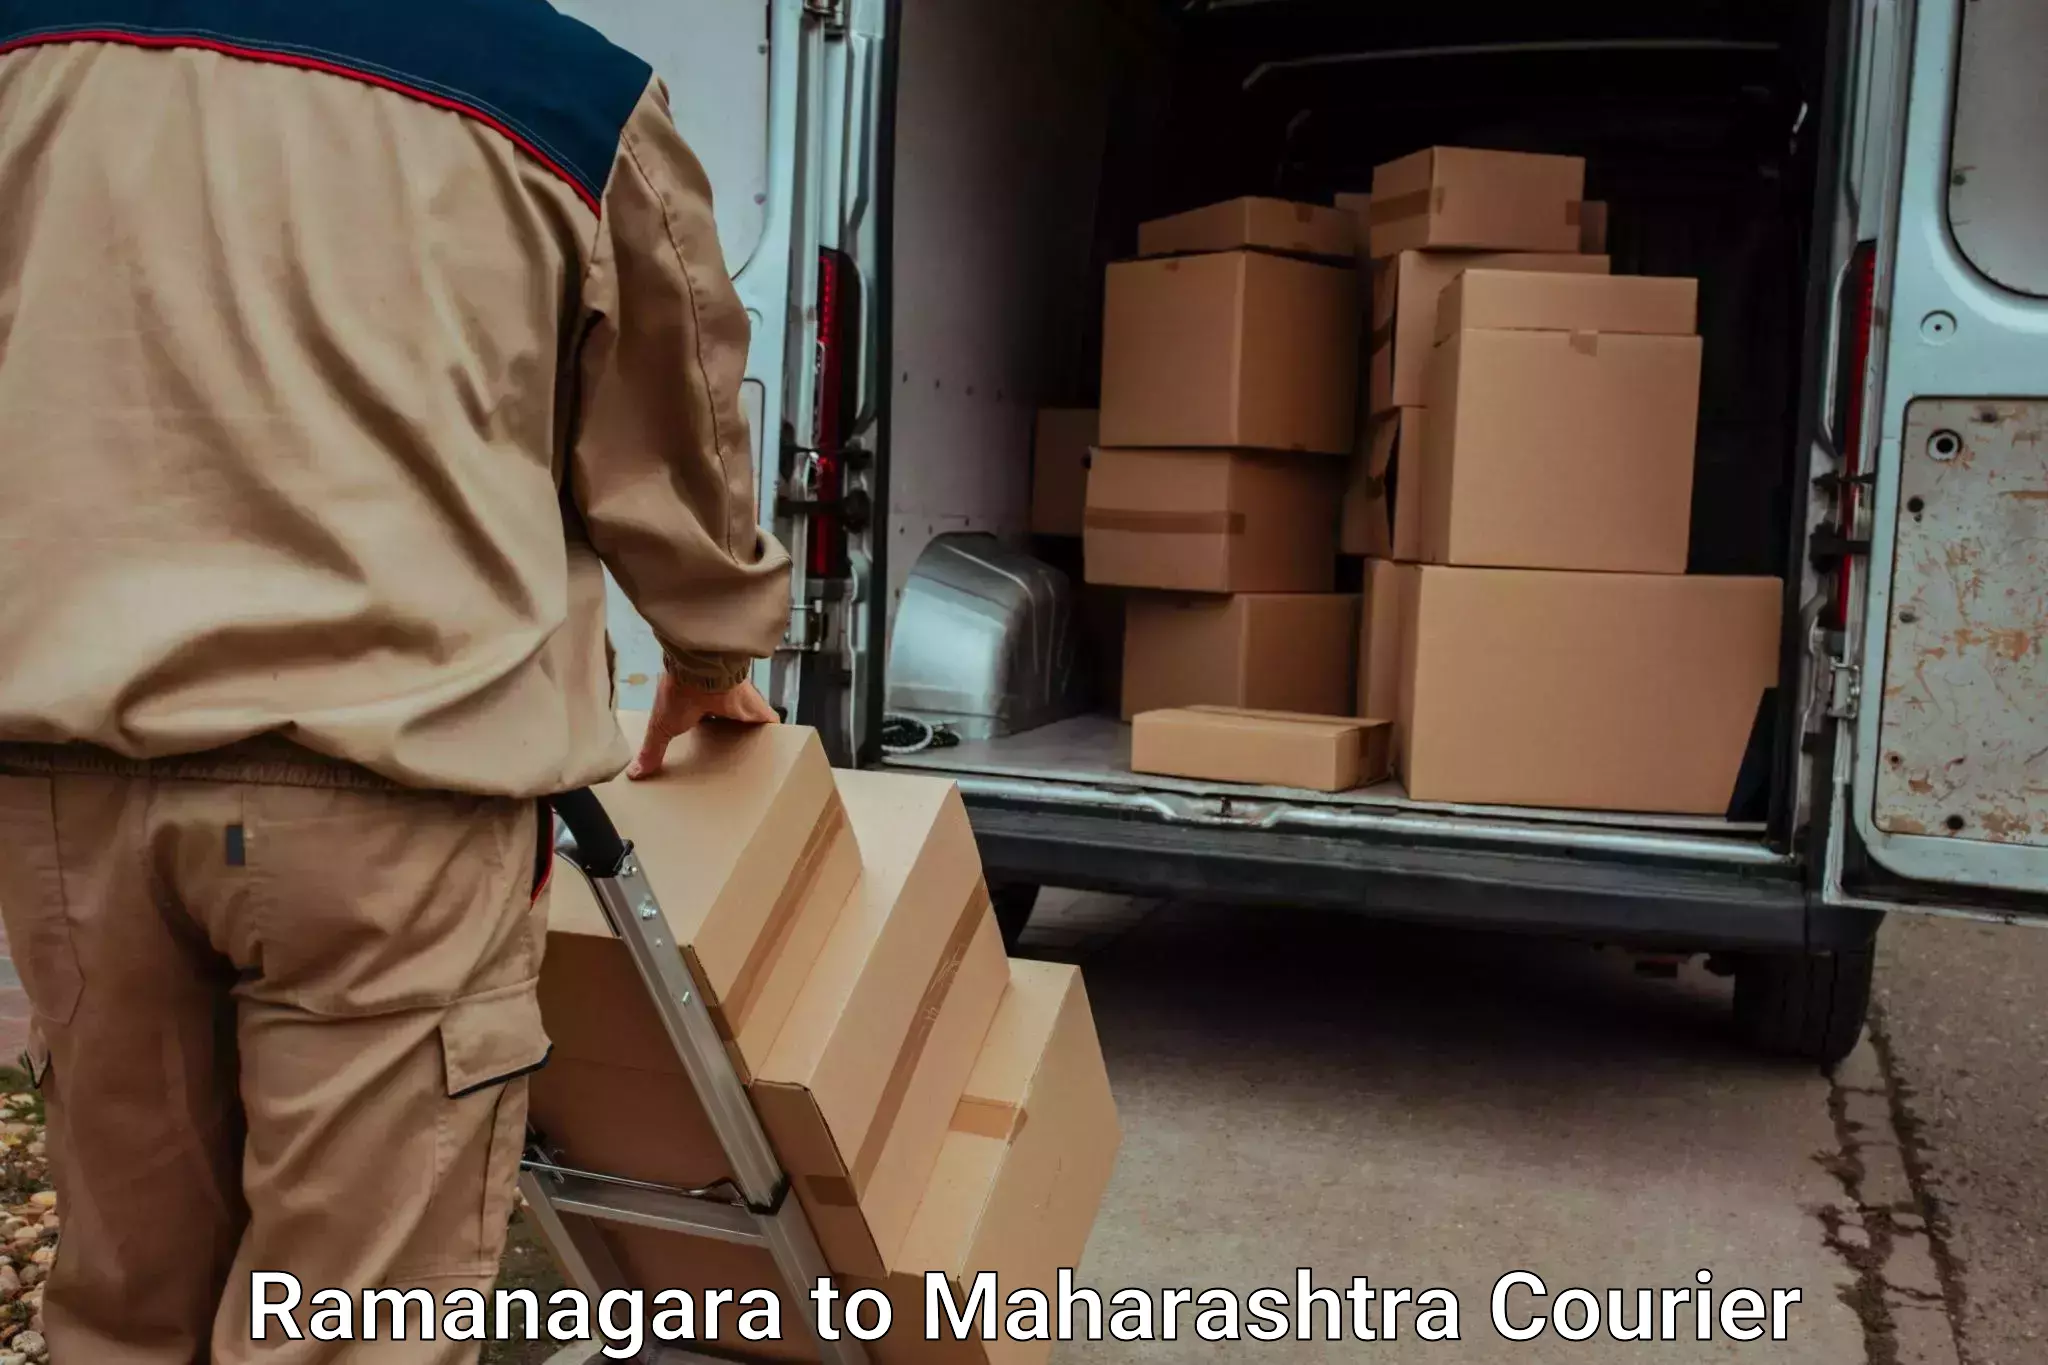 Same day luggage service Ramanagara to Maharashtra